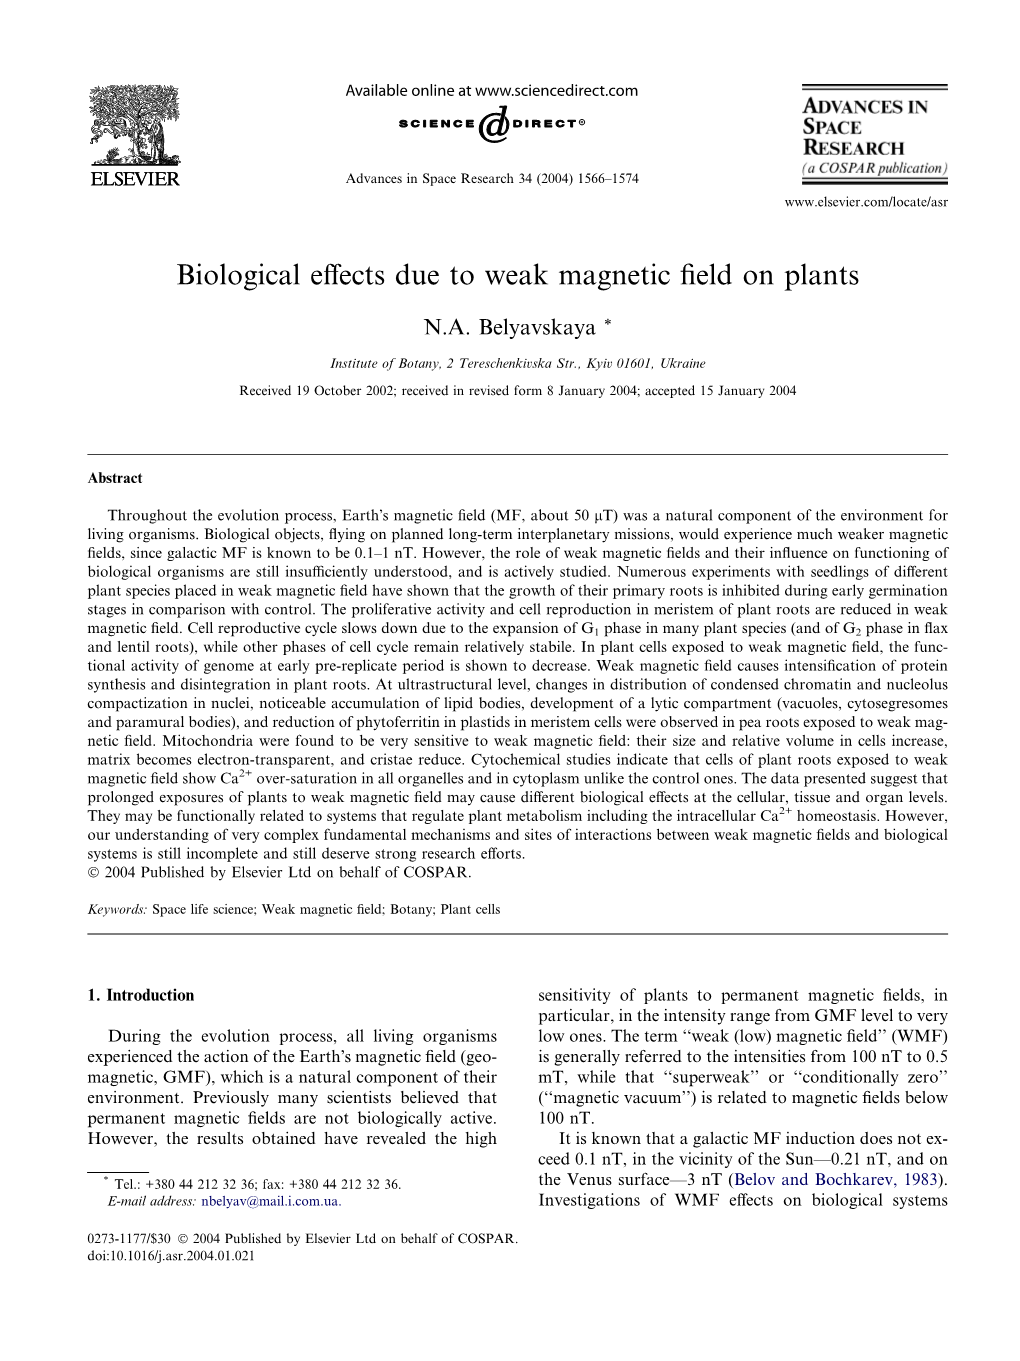 Biological Effects Due to Weak Magnetic Field on Plants